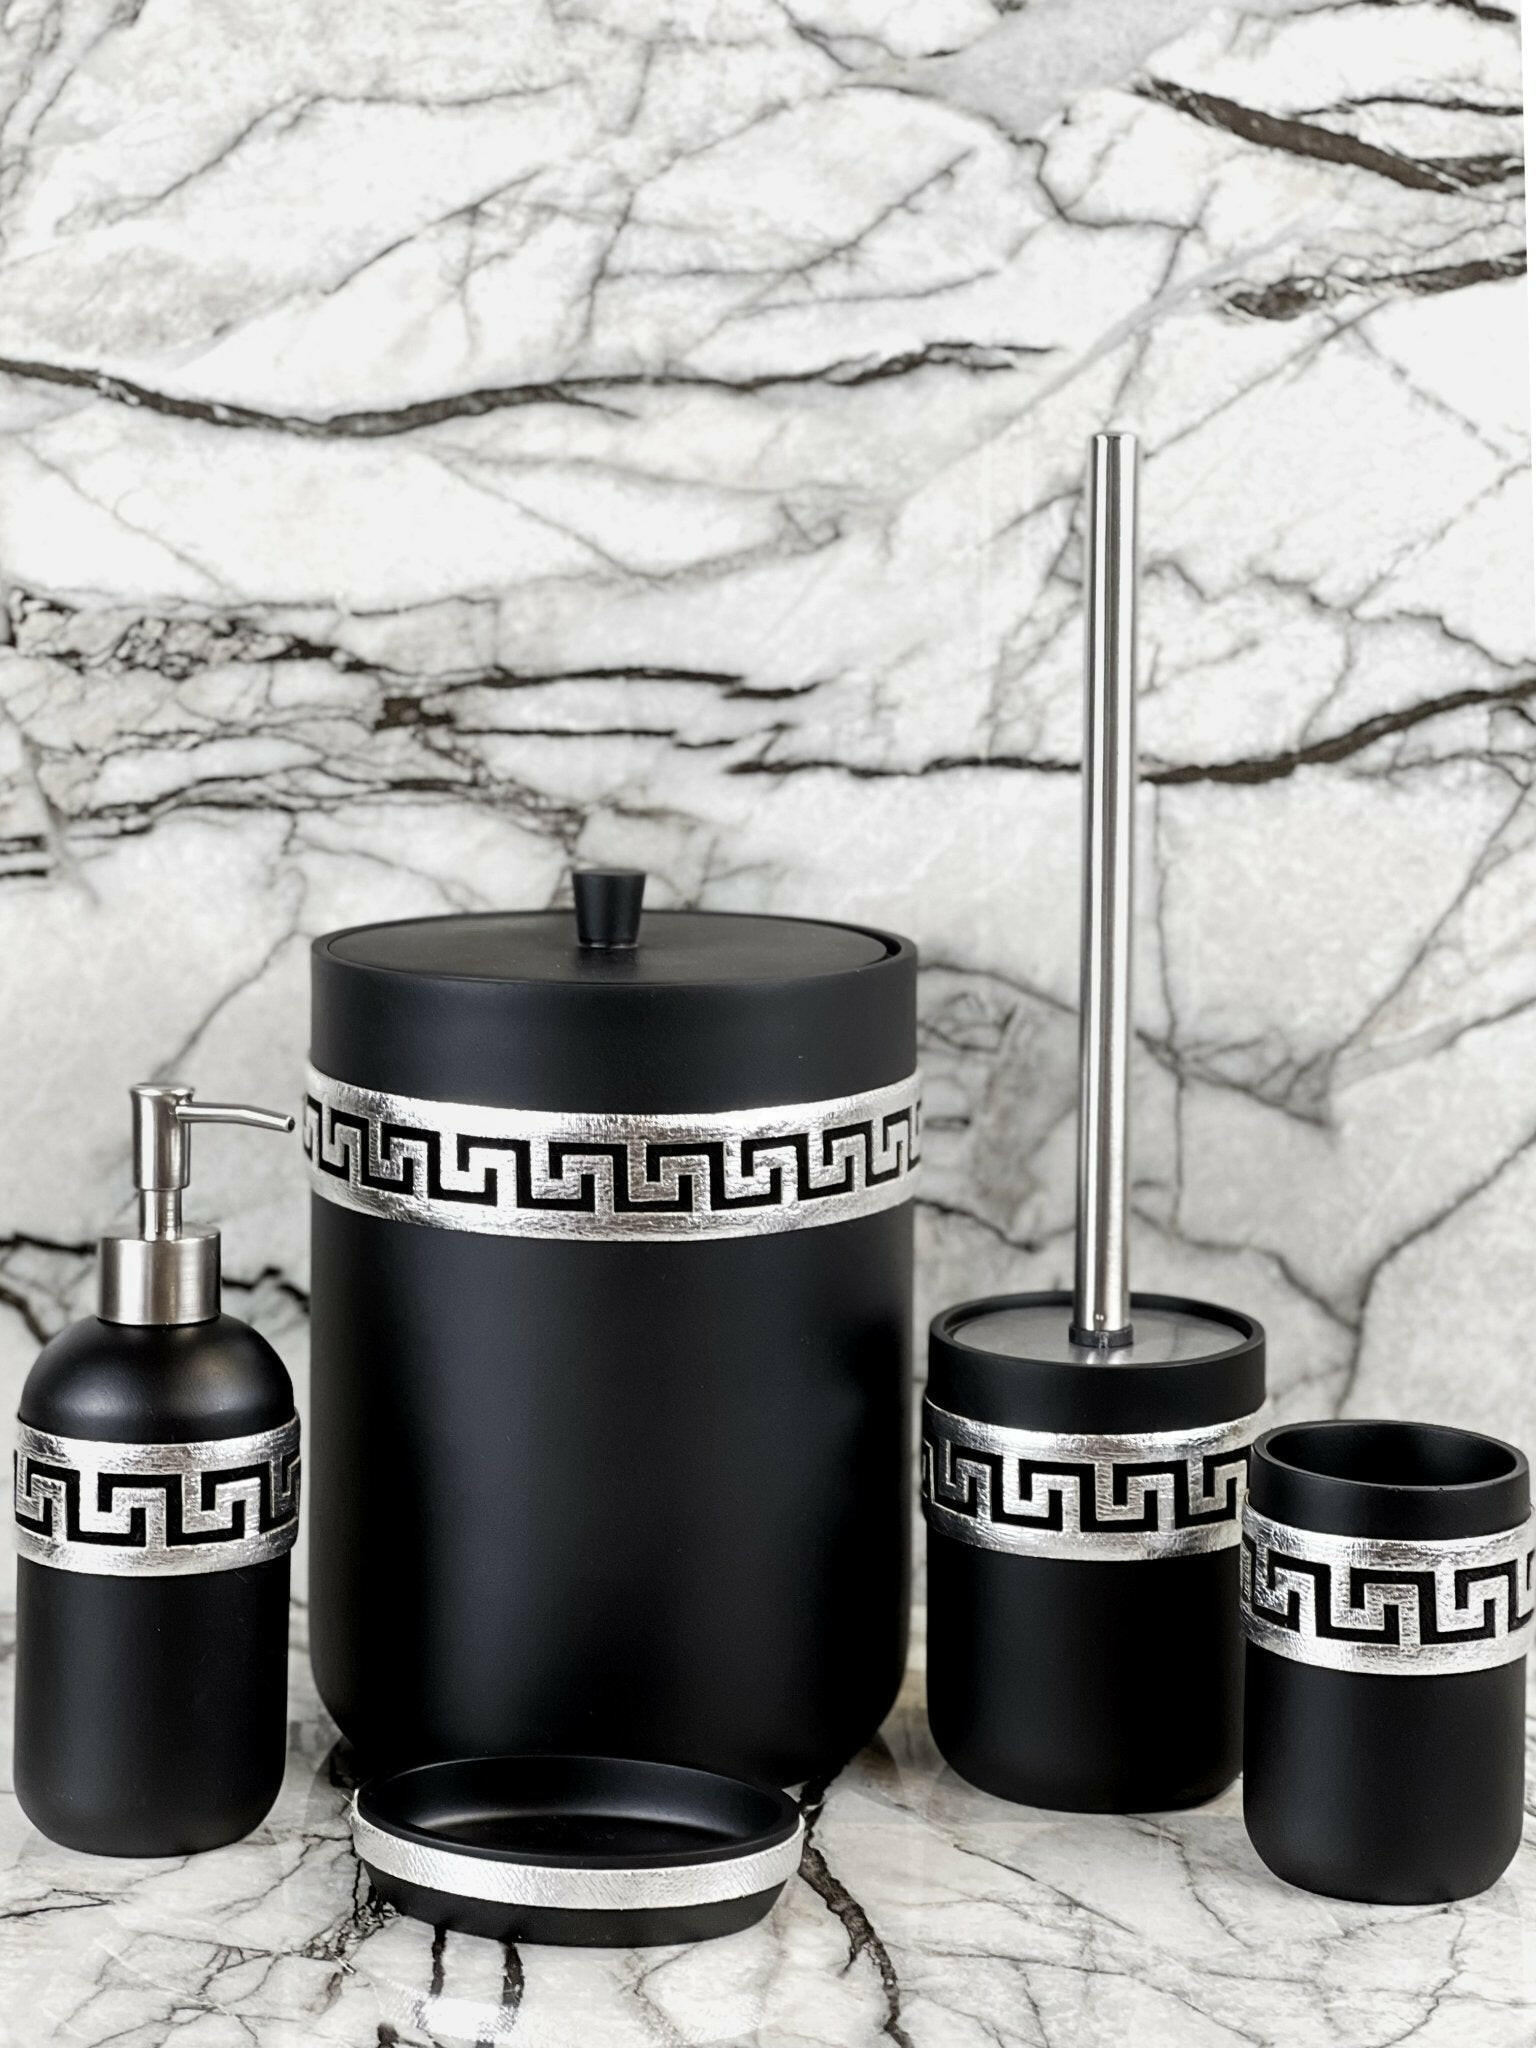 Anka Bathroom Set - Creative Home, Resin Black & Silver Bathroom Accessory Sets, Versace Style Greek Key Patterned Black & Silver Bathroom Decor